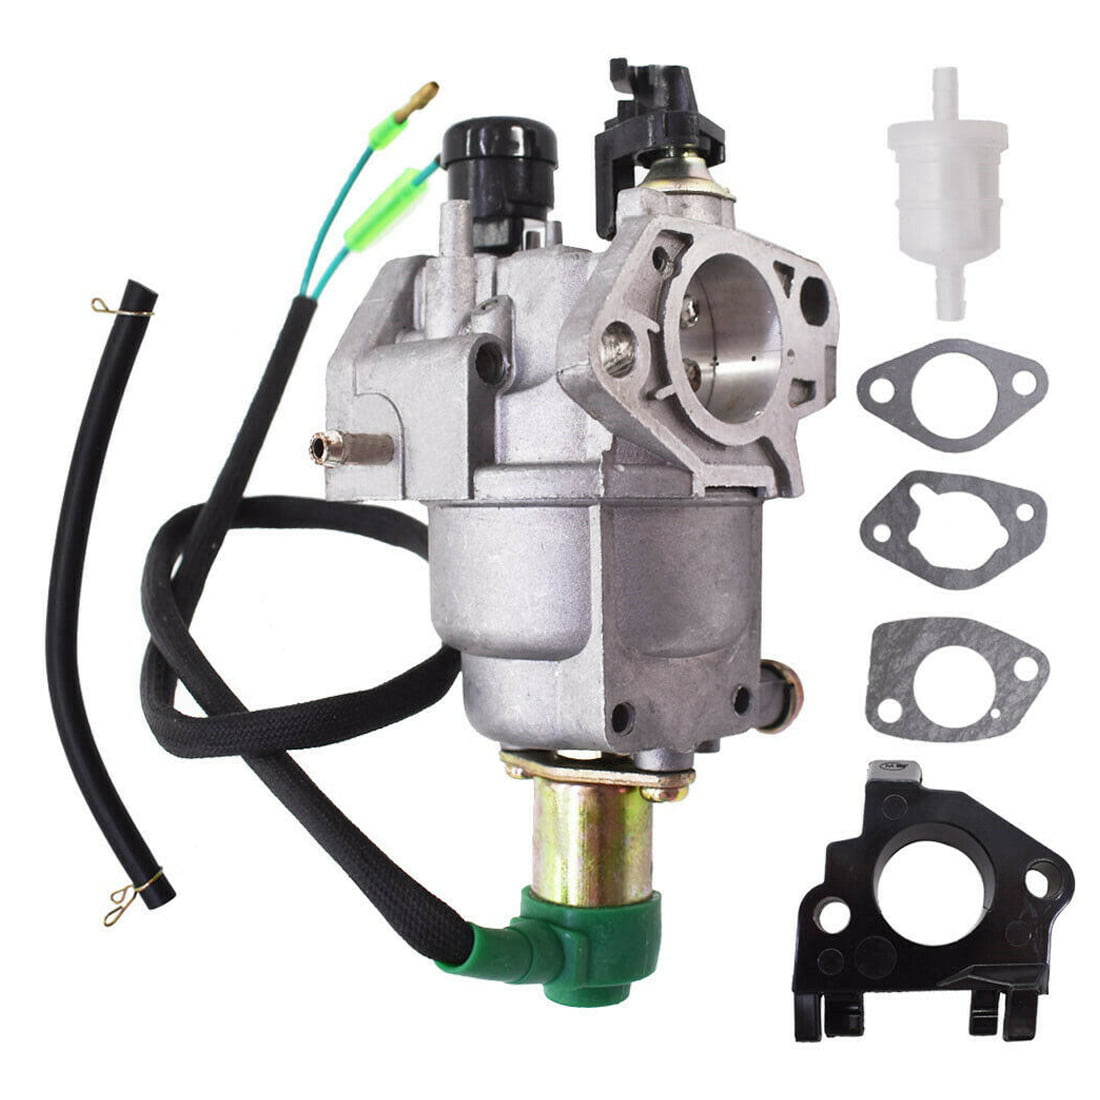 3x Carburetor Gaskets For Honda GX340 GX390 Engine Motor Replace Rebuild Kit 